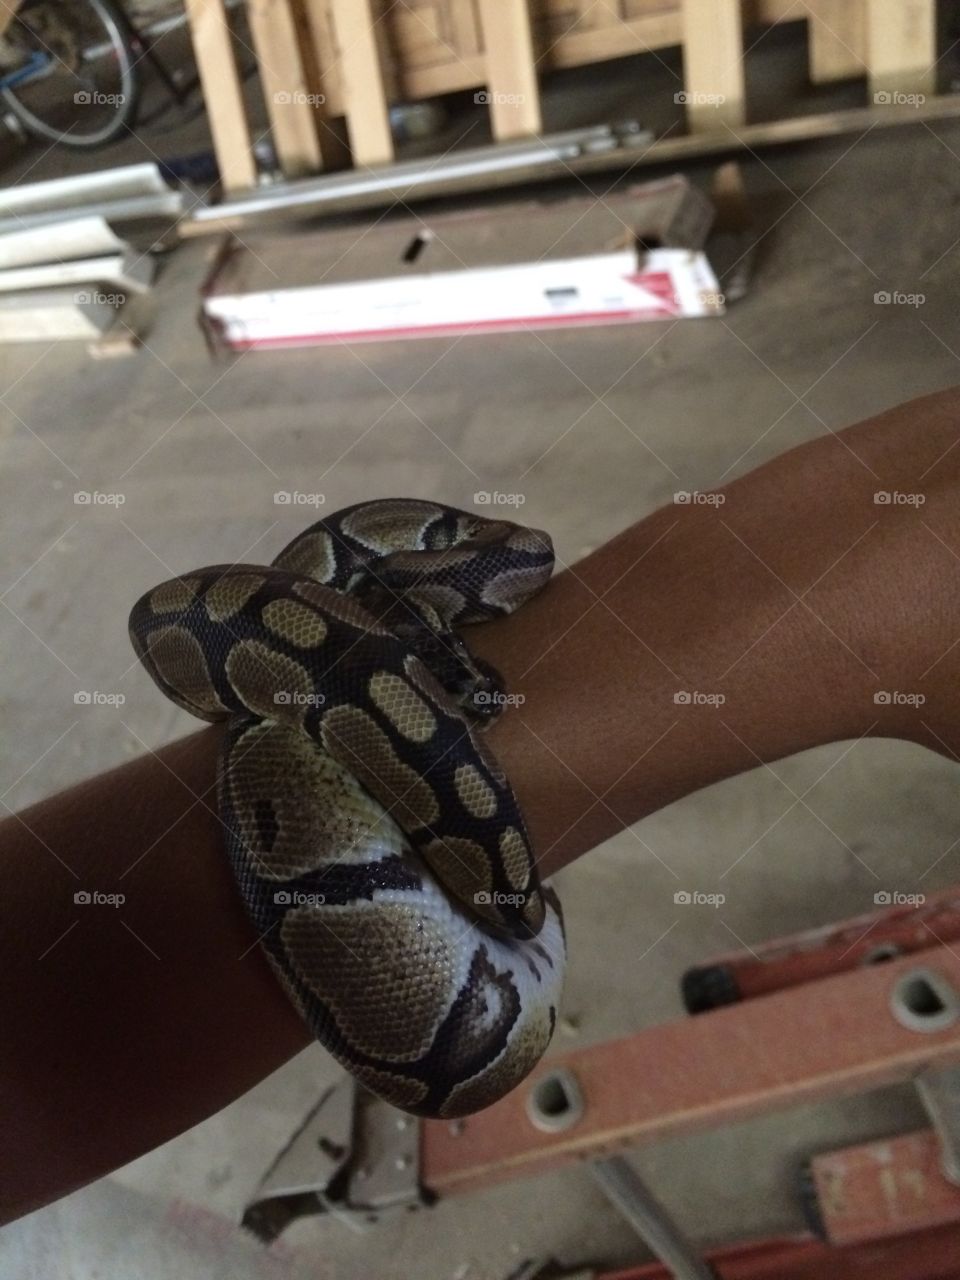 Snake bracelet. Reptile. Venom. Fear. Reptiles. Suffocating feasting. 